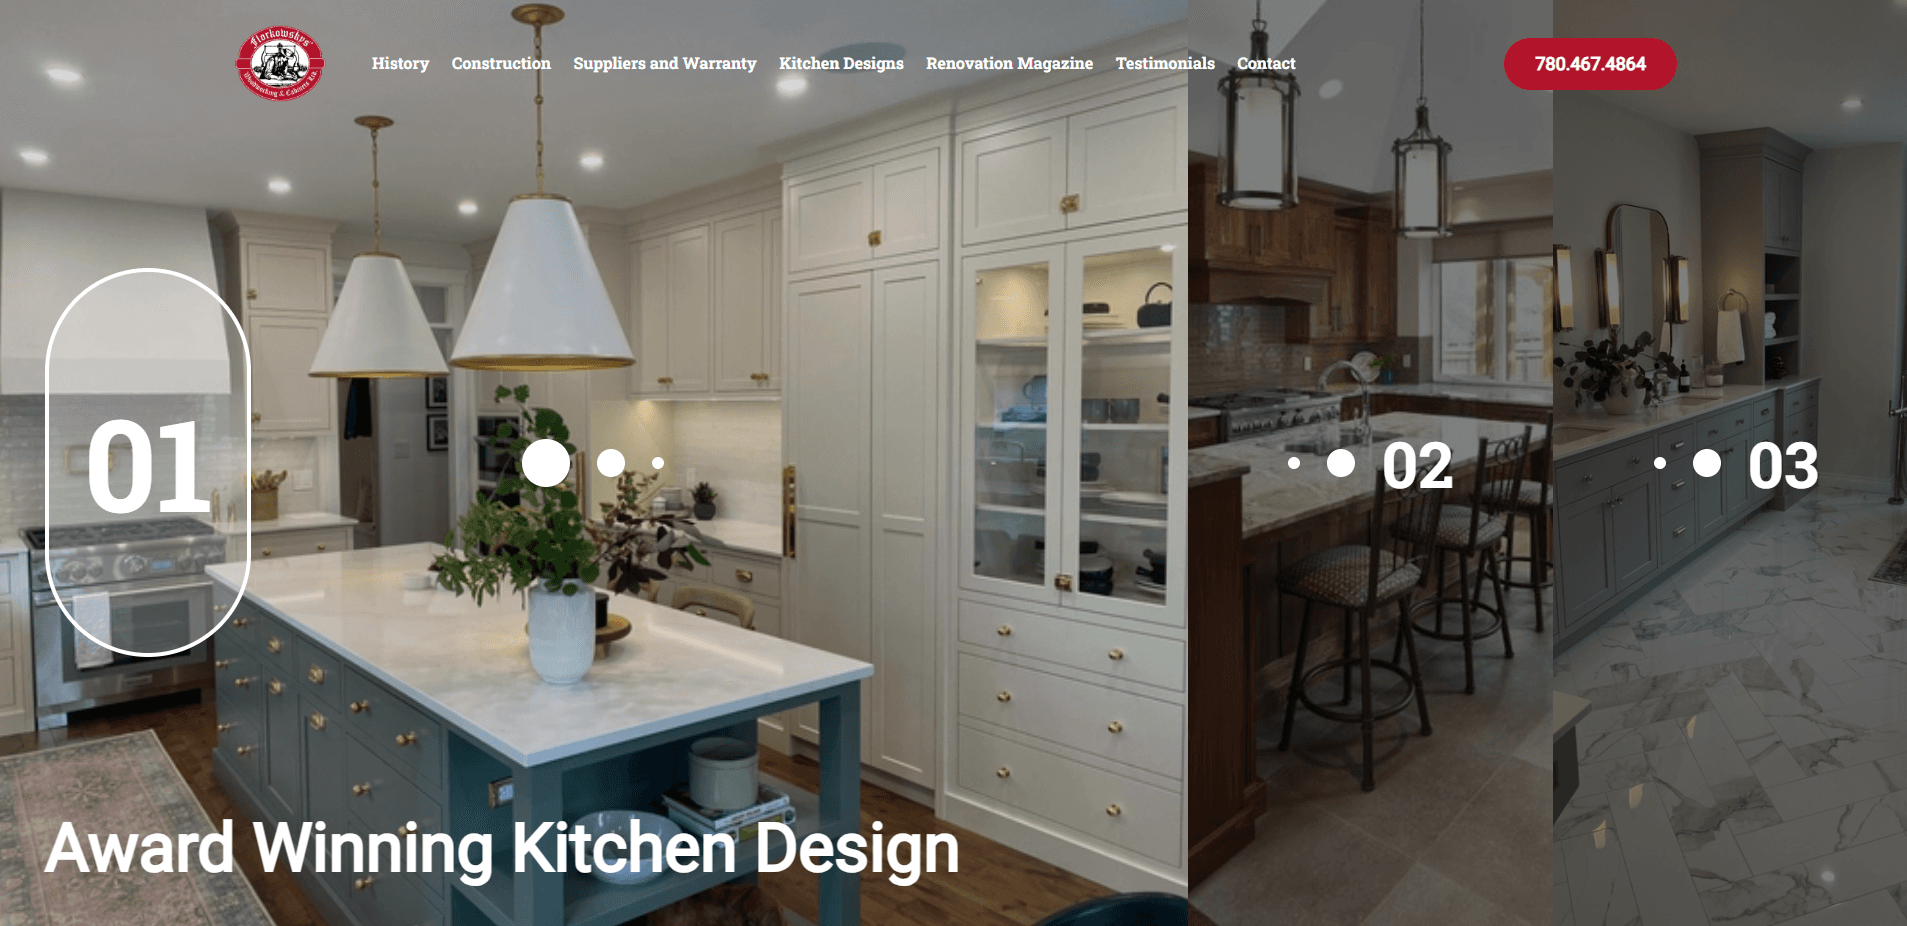 Website Design for Custom Cabinets Company